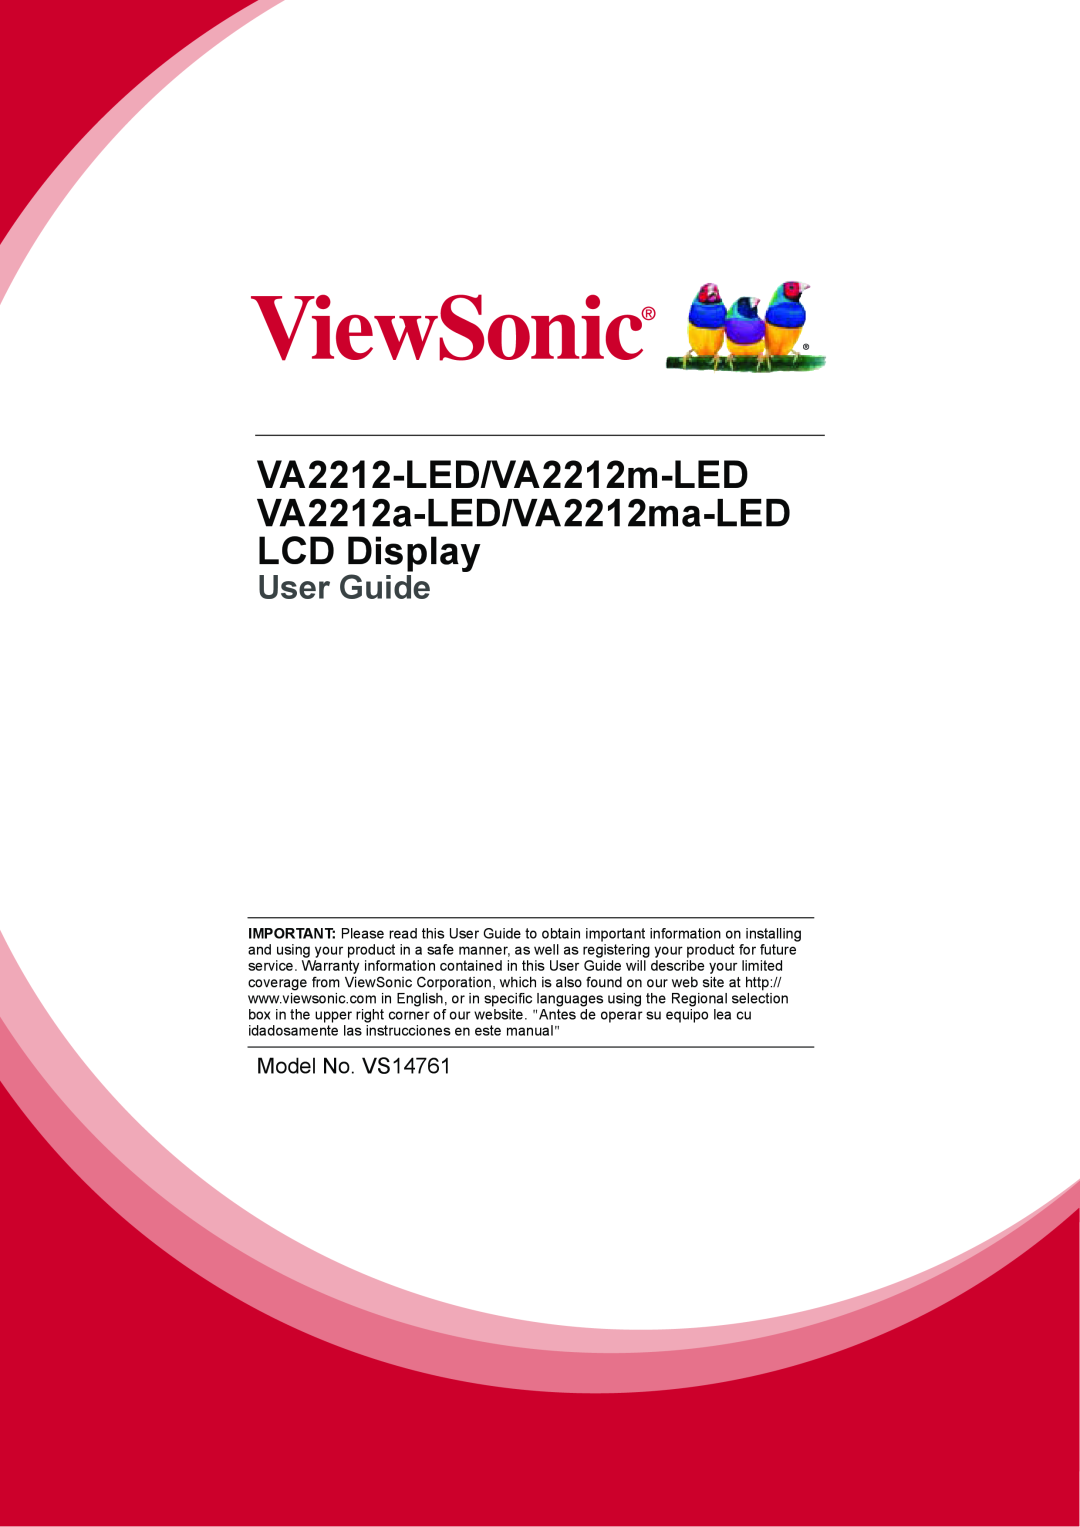 ViewSonic VA2212mLED warranty VA2212-LED/VA2212m-LED VA2212a-LED/VA2212ma-LED, LCD Display, User Guide 